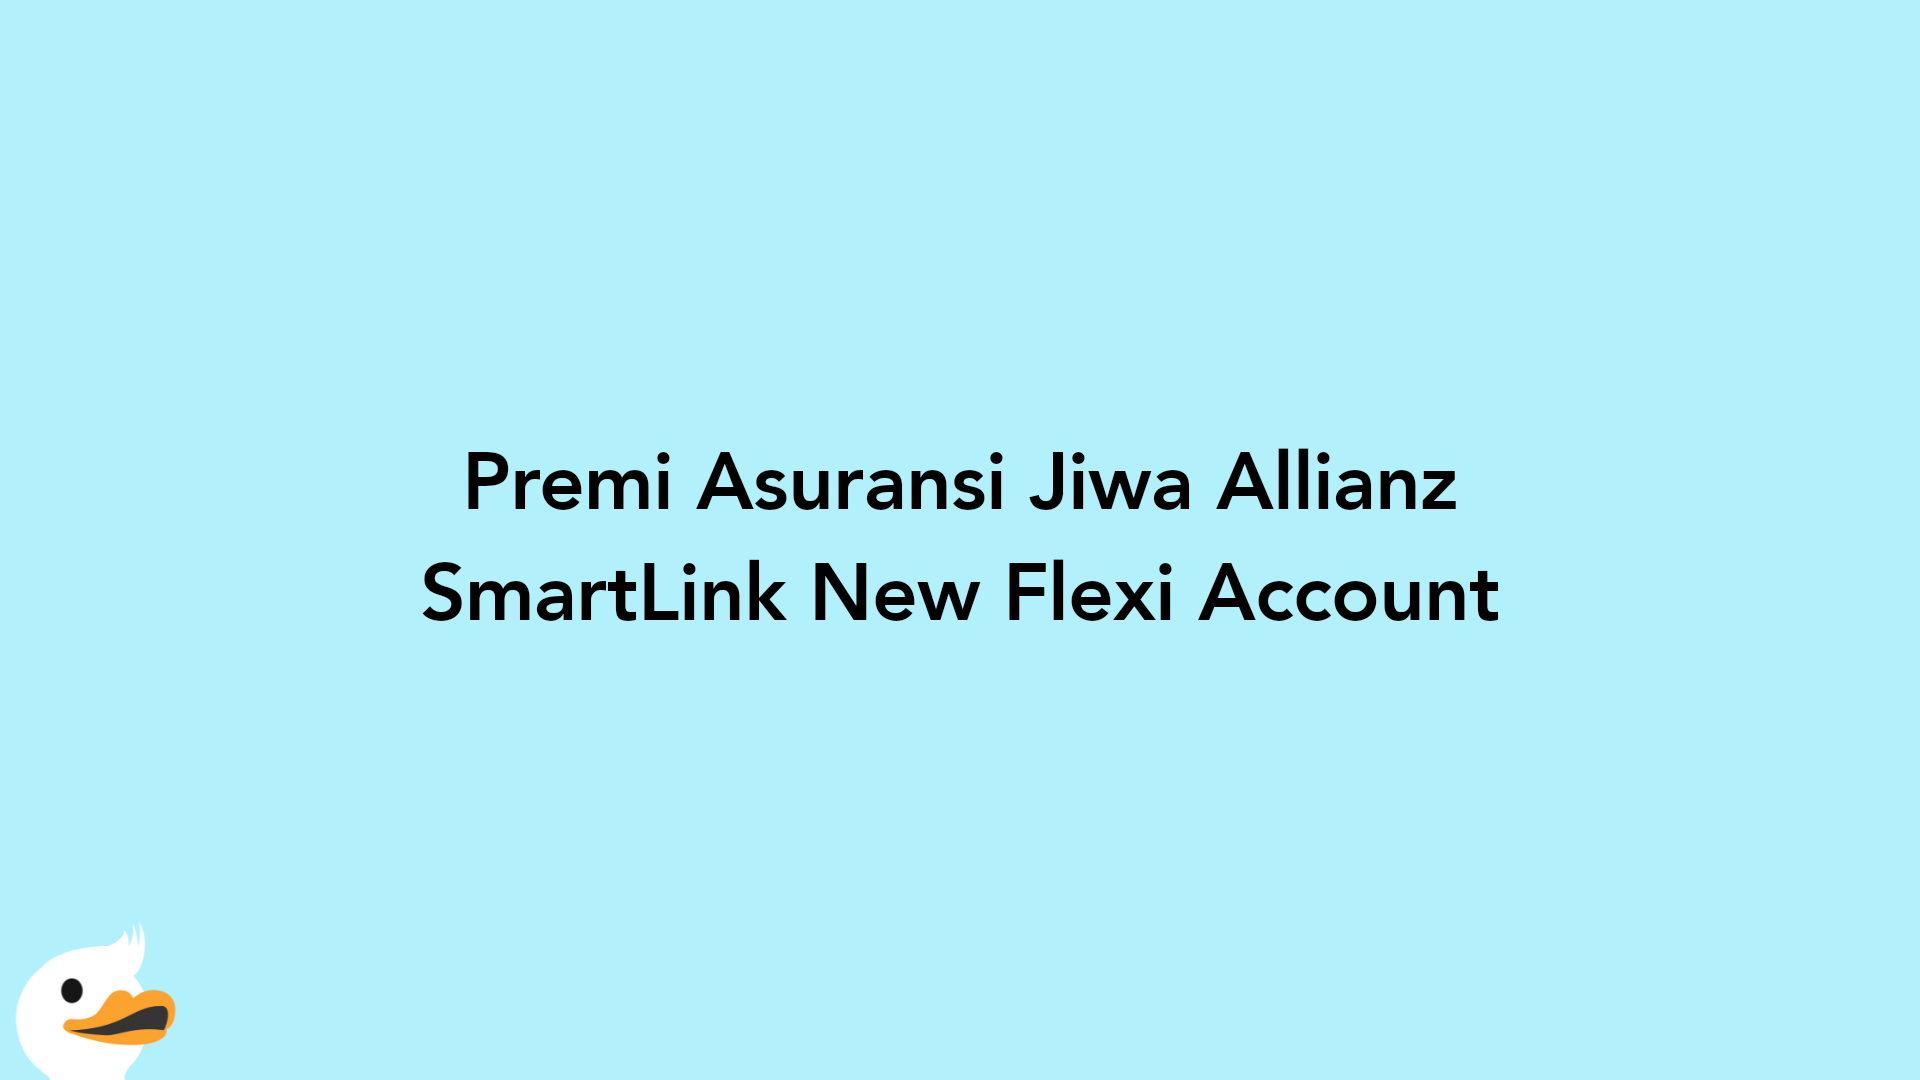 Premi Asuransi Jiwa Allianz SmartLink New Flexi Account